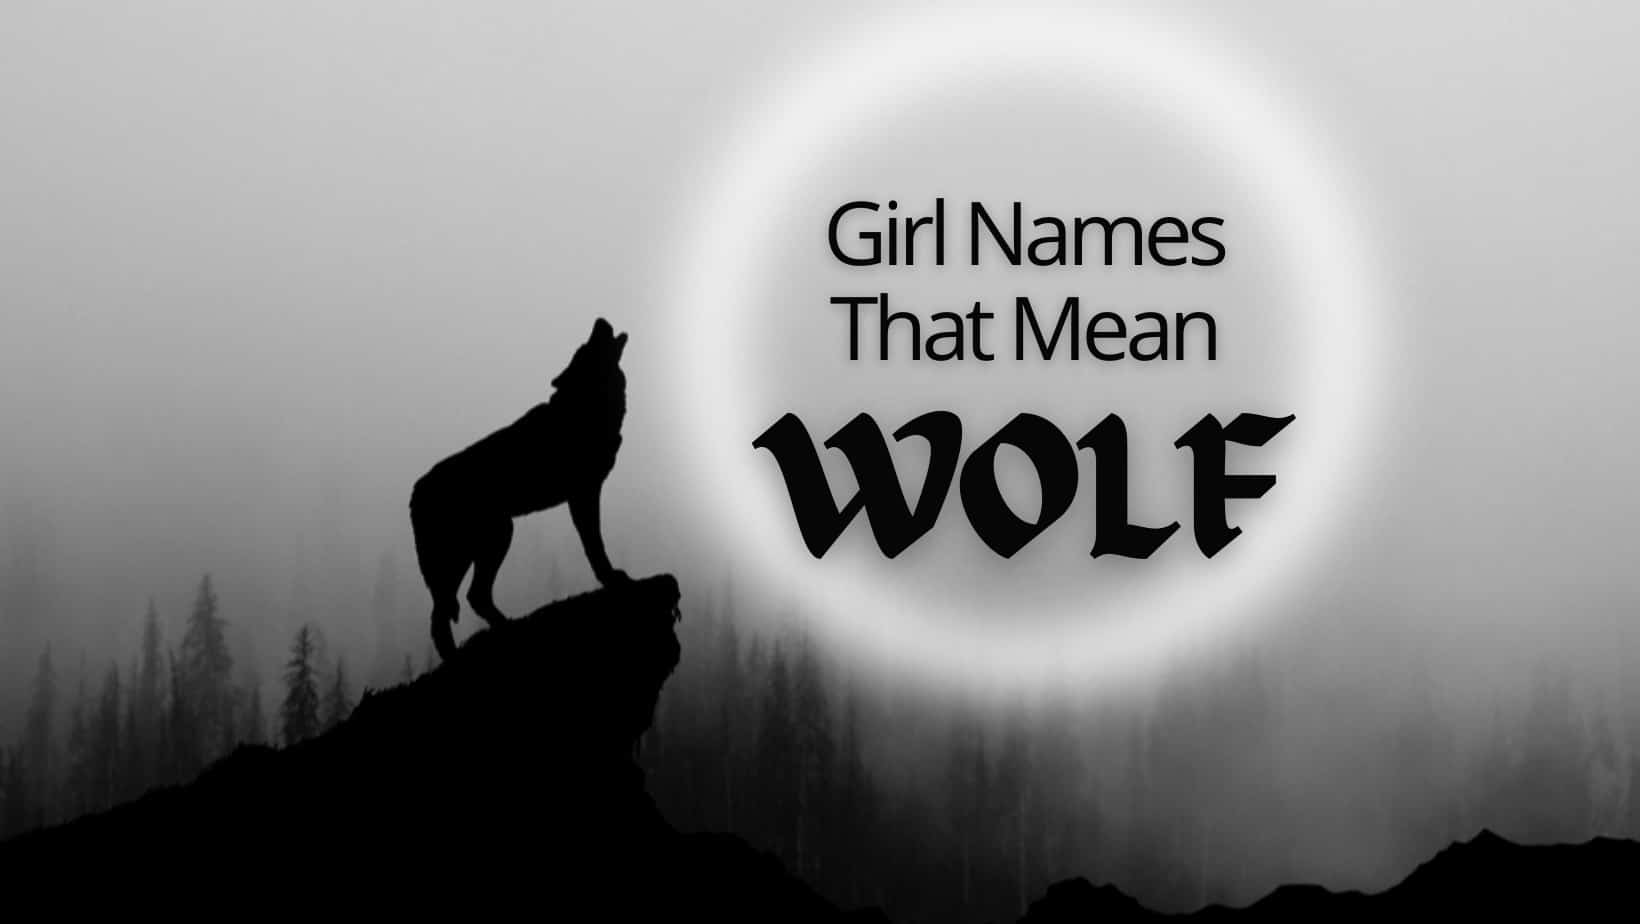 Mean a wolf